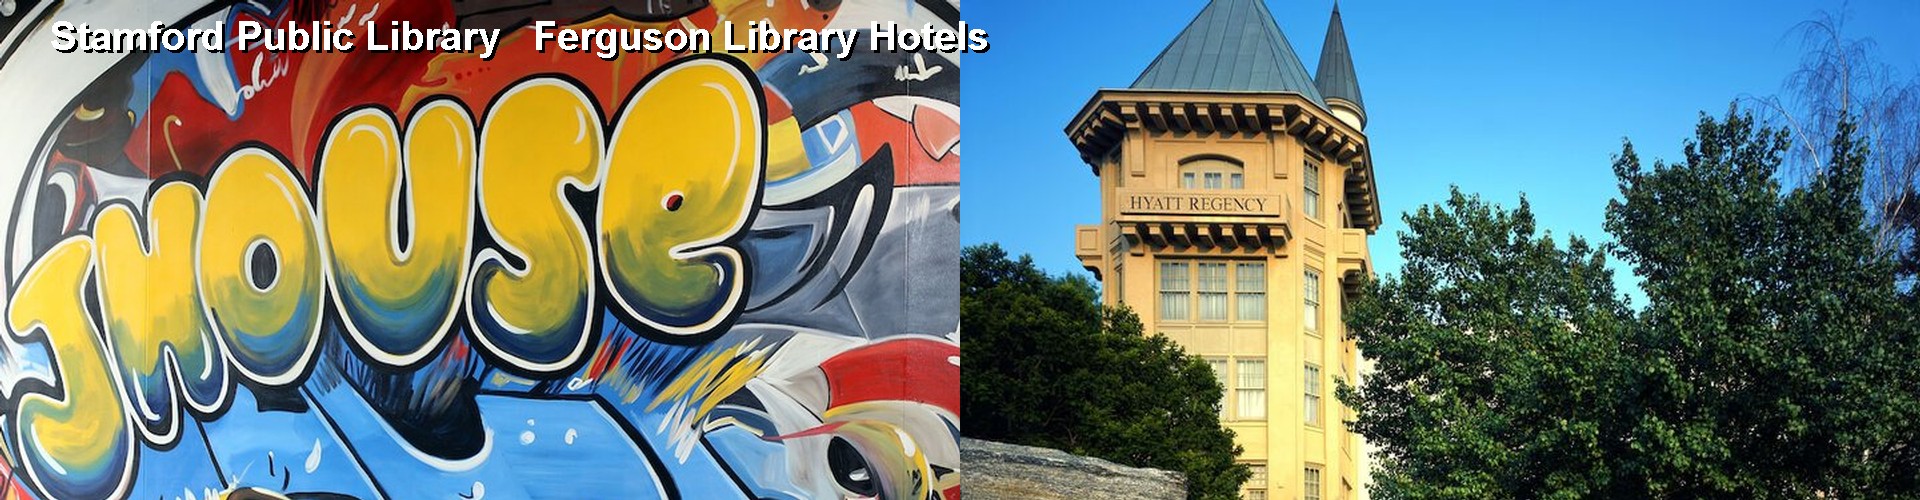 5 Best Hotels near Stamford Public Library Ferguson Library